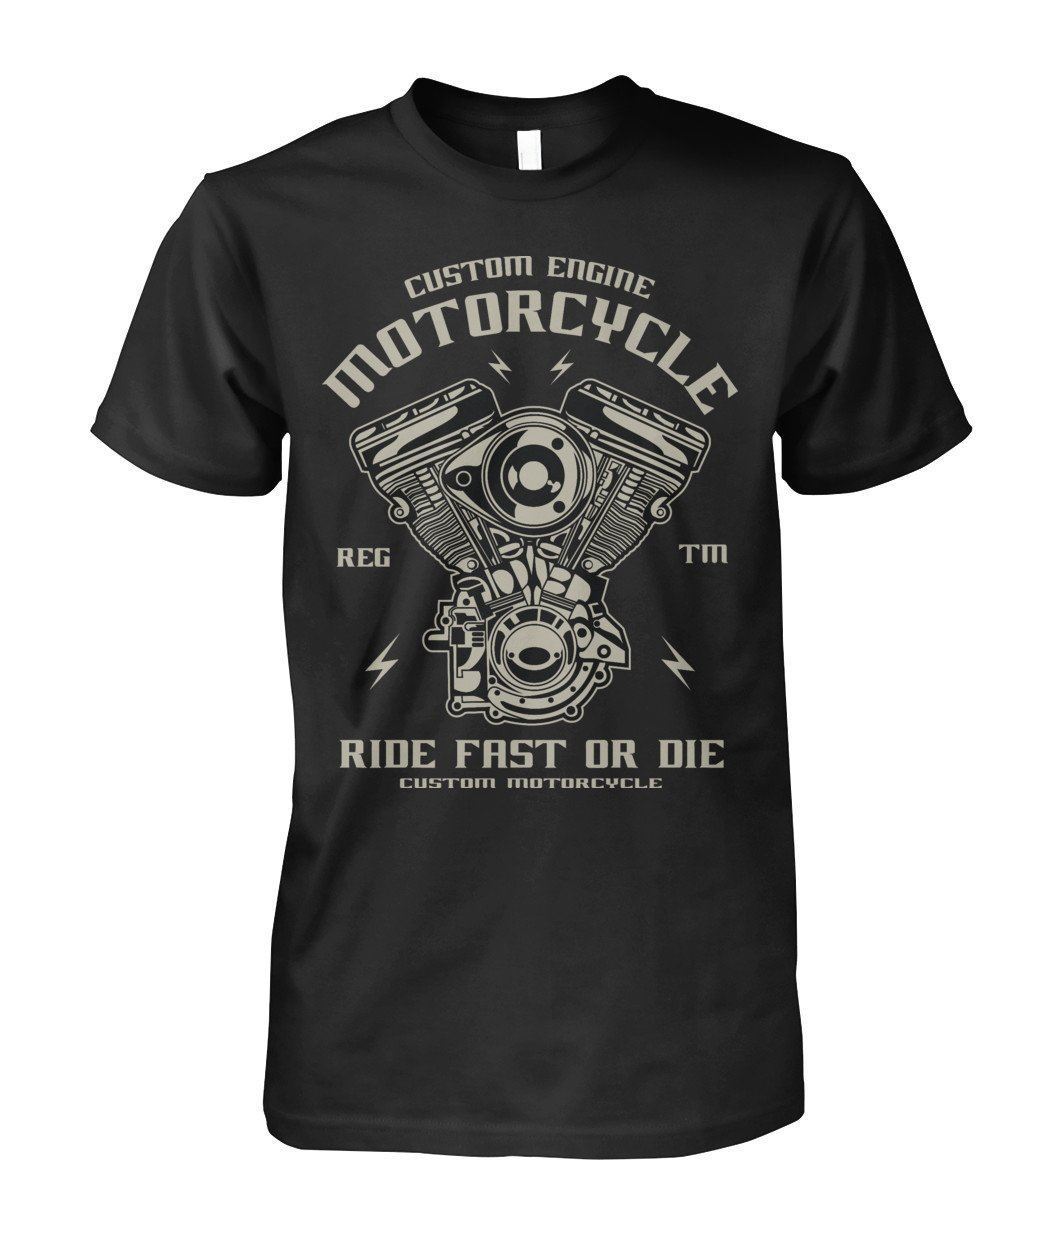 Biker T-shirt with Engine Print / Short Sleeve vintage tees / Rock t shirts - HARD'N'HEAVY